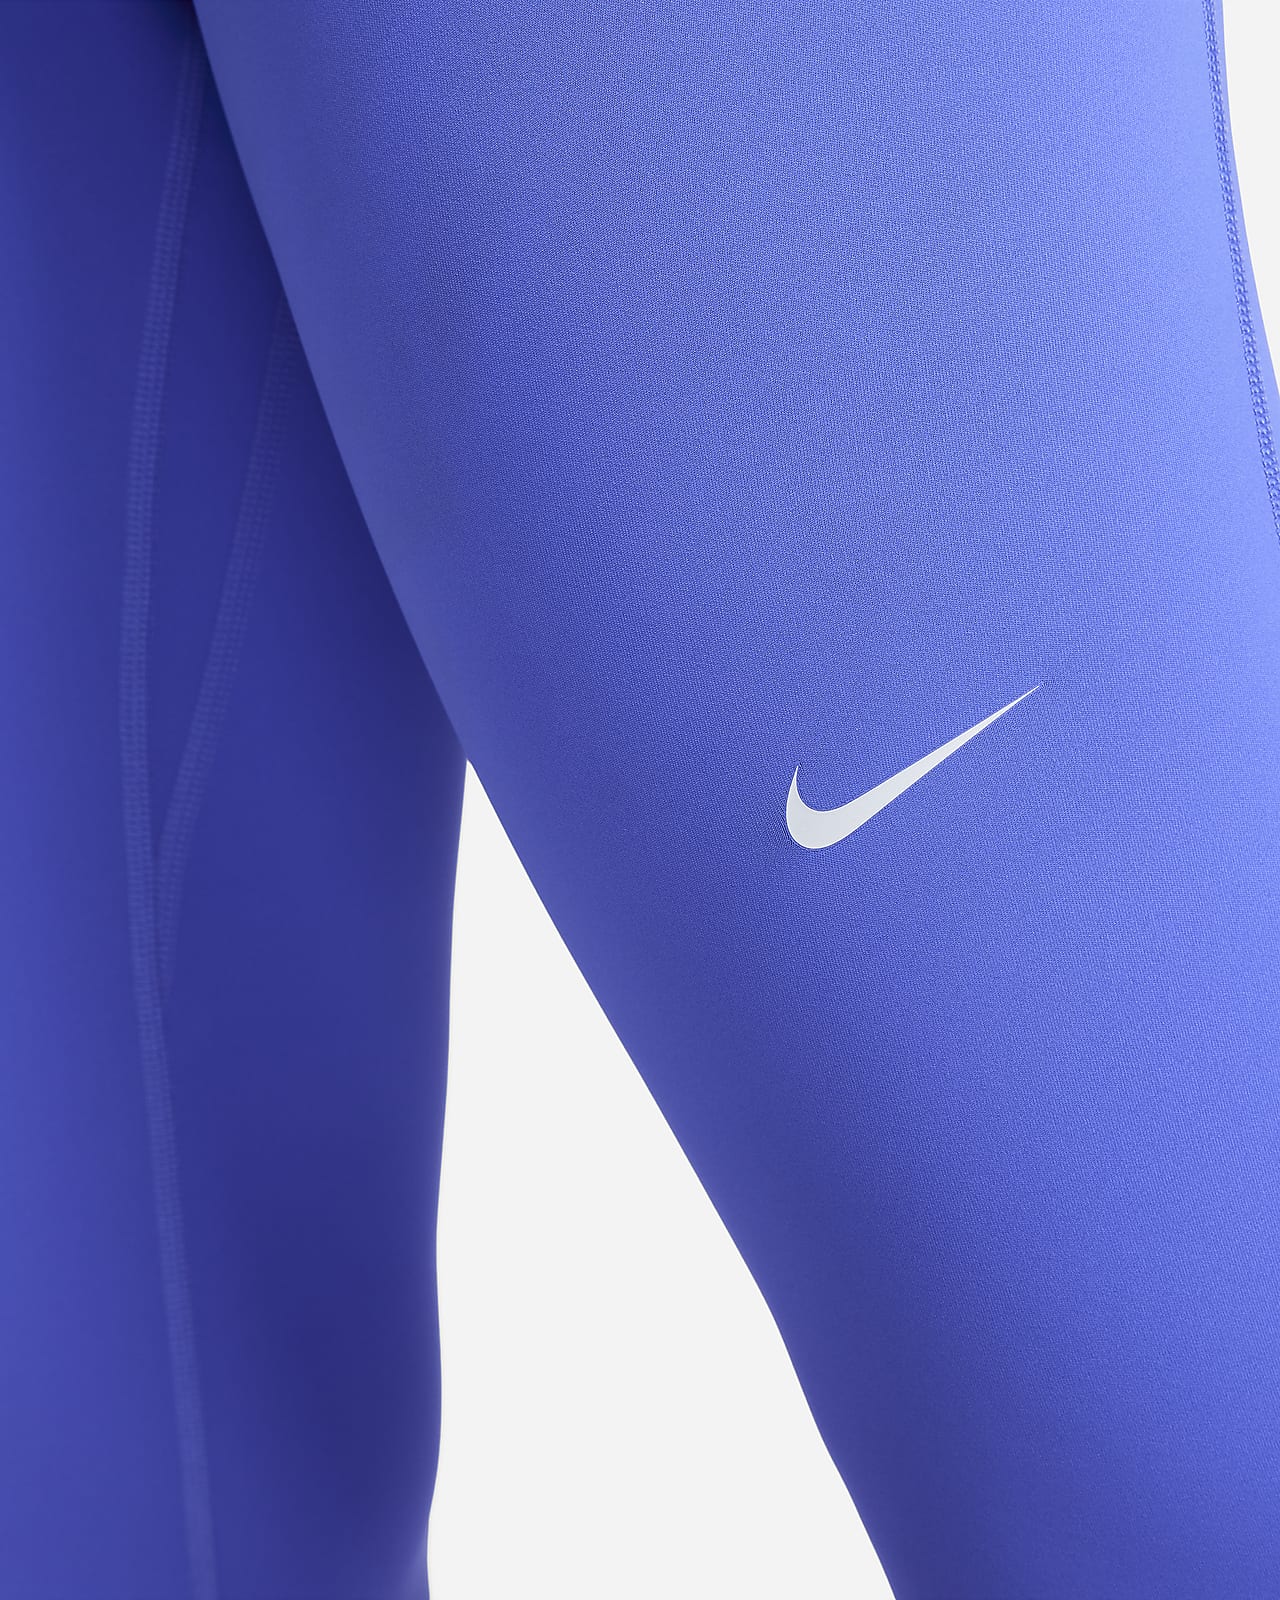 NEW Nike Legendary Mid Rise Zip Cuff Training Tights - 874733-002 - Grey -  Large